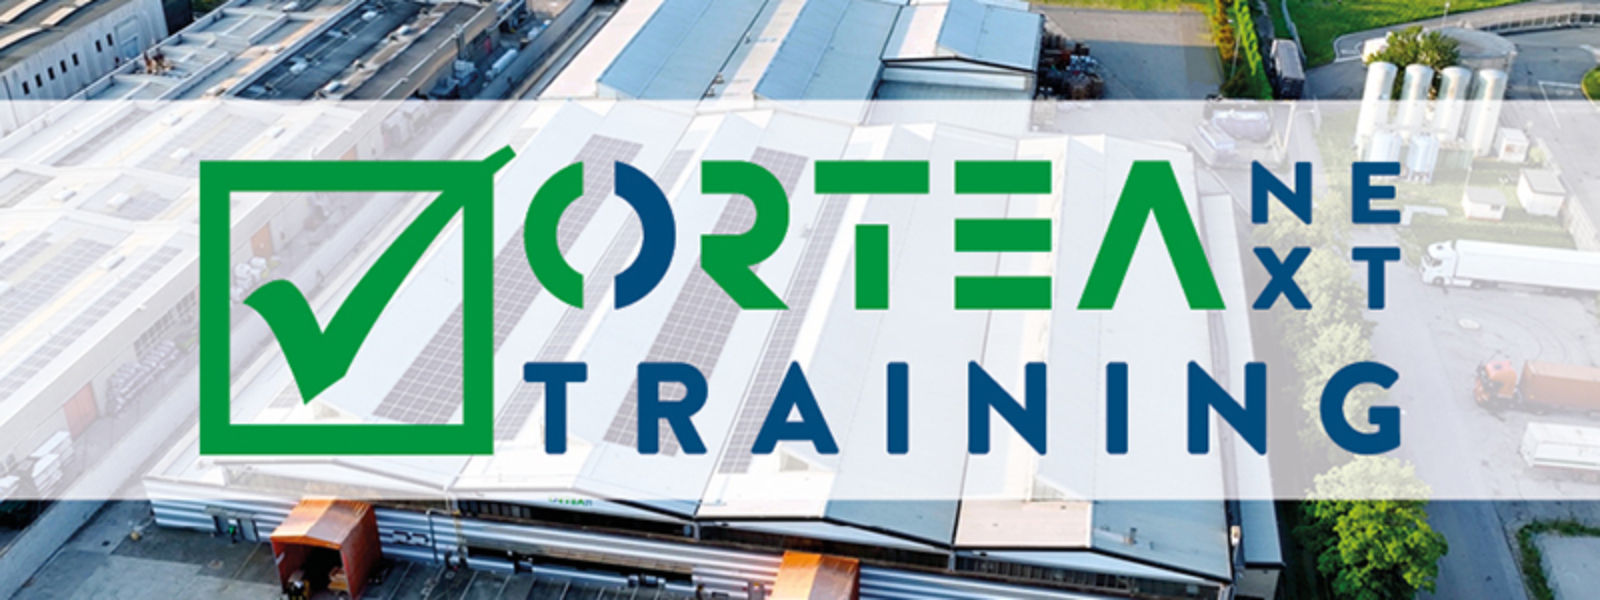 ORTEA NEXT TRAINING 2023: ENROLMENTS ARE NOW OPEN!